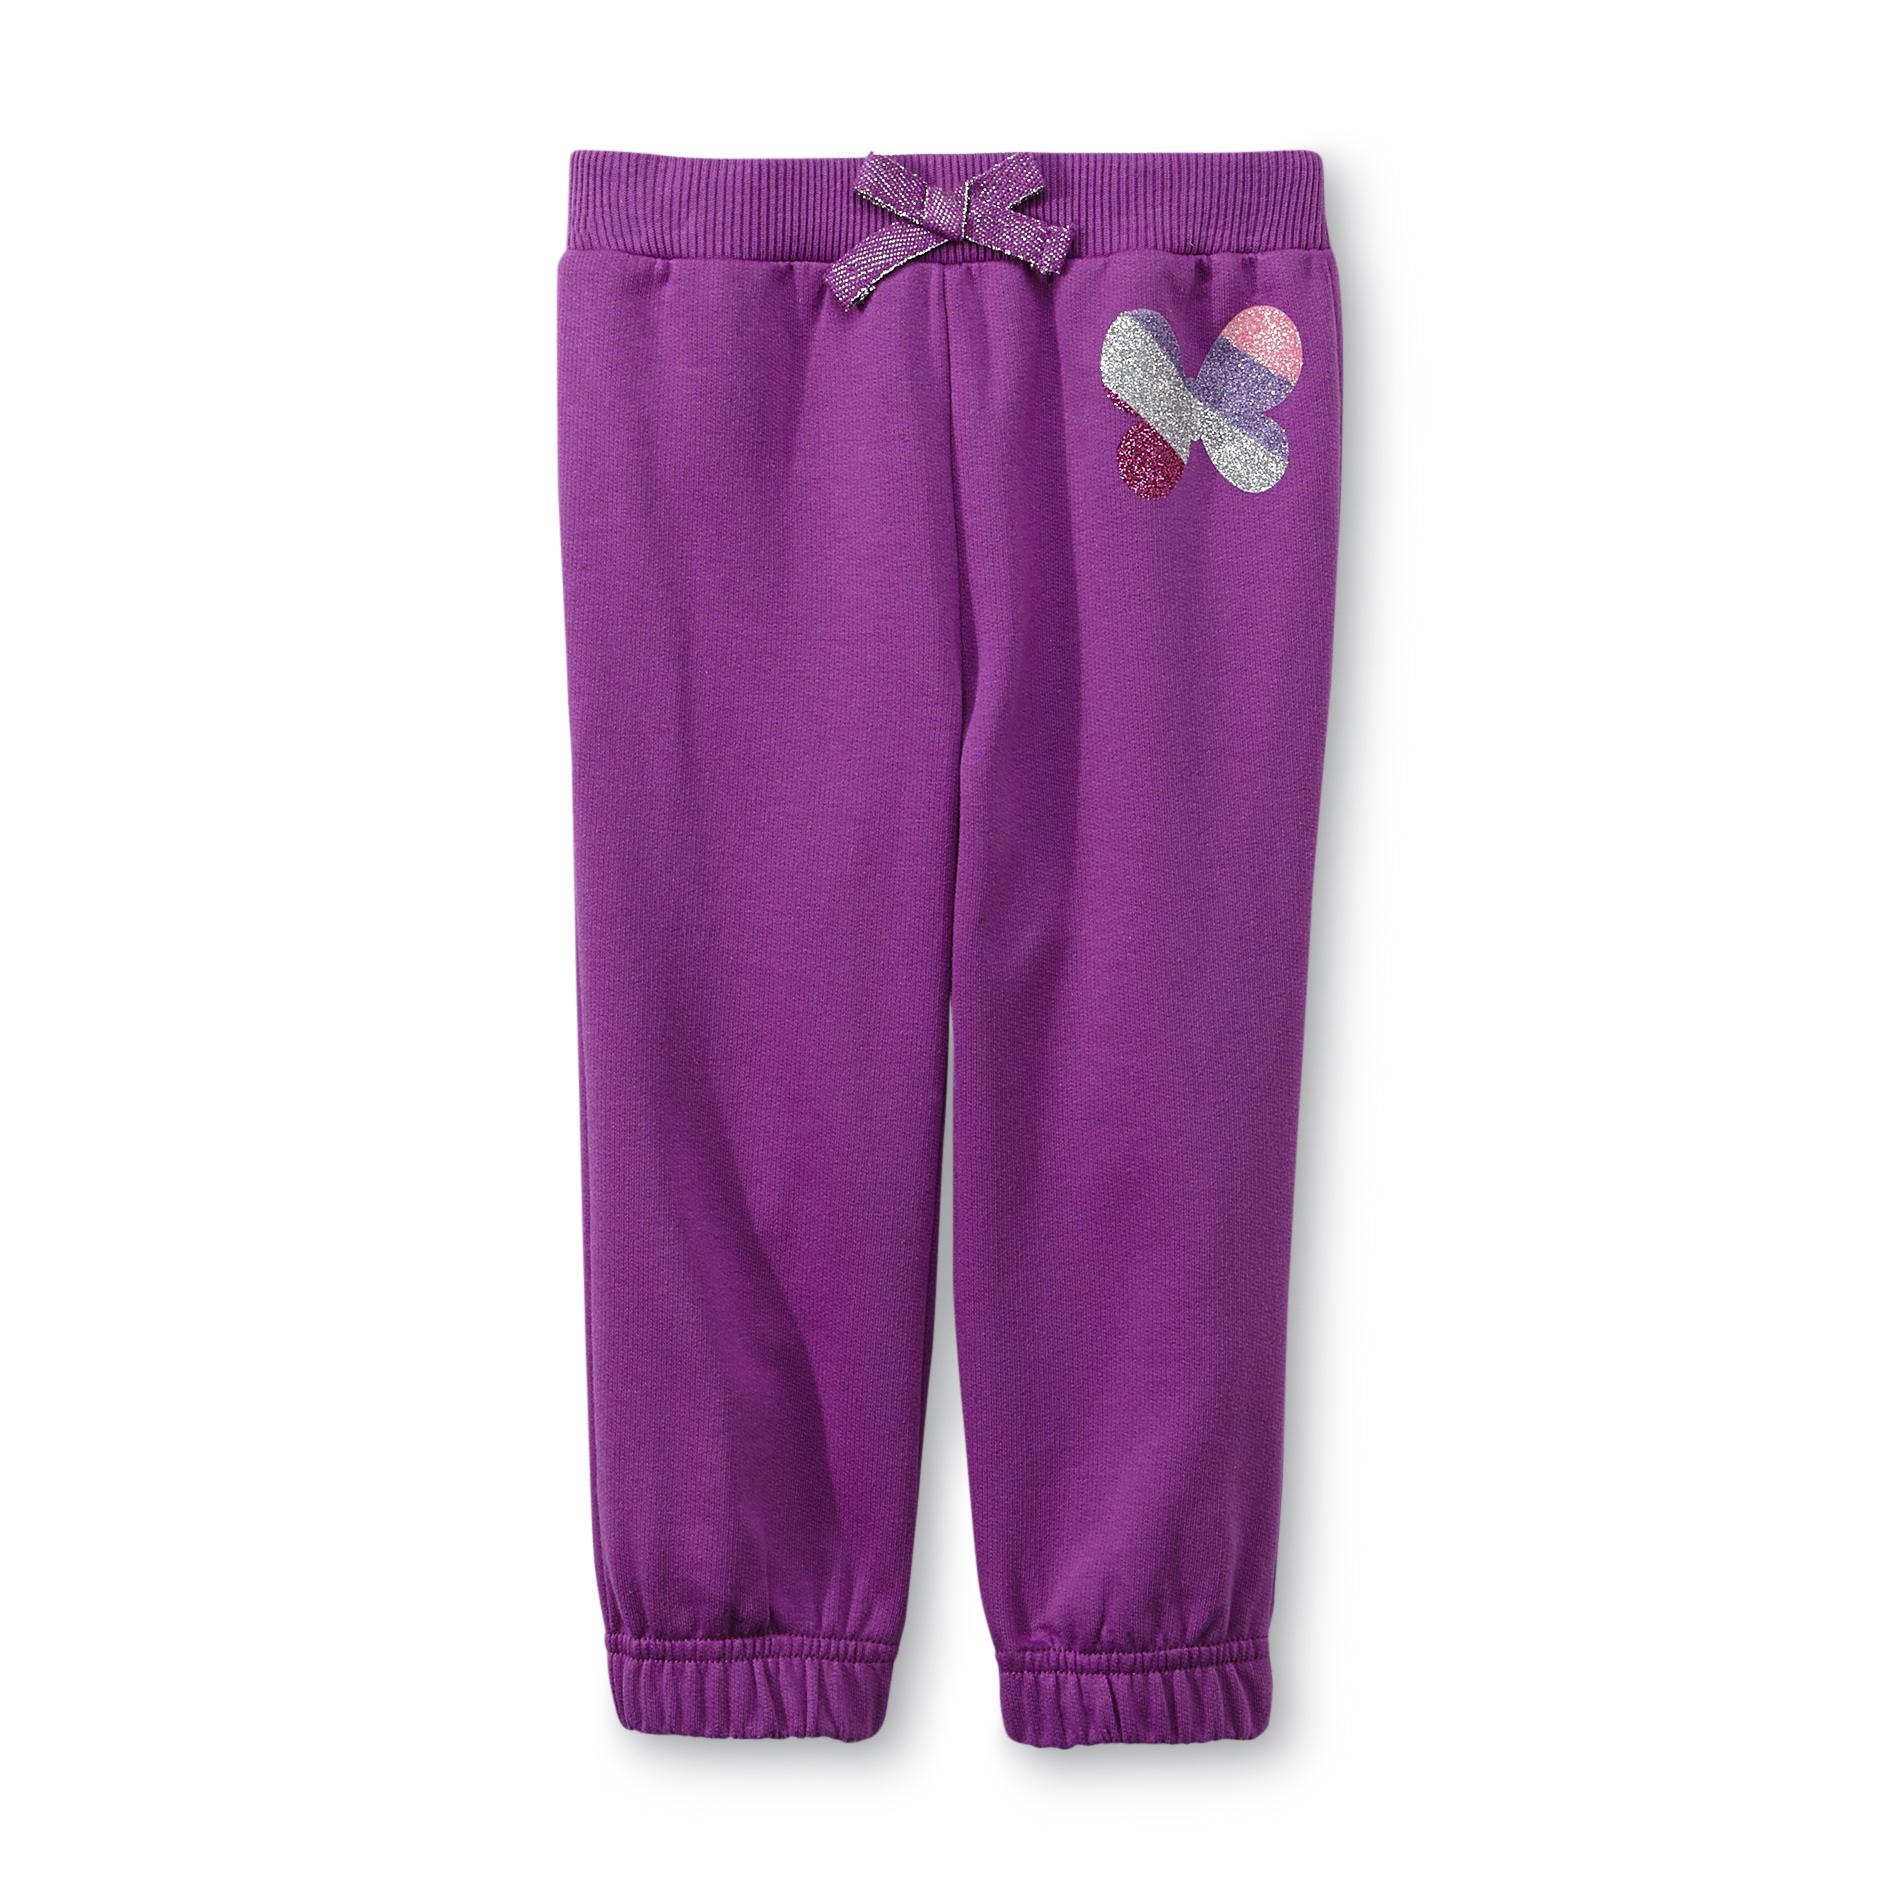 WonderKids Infant & Toddler Girl's Sweatpants - Glitter Butterfly